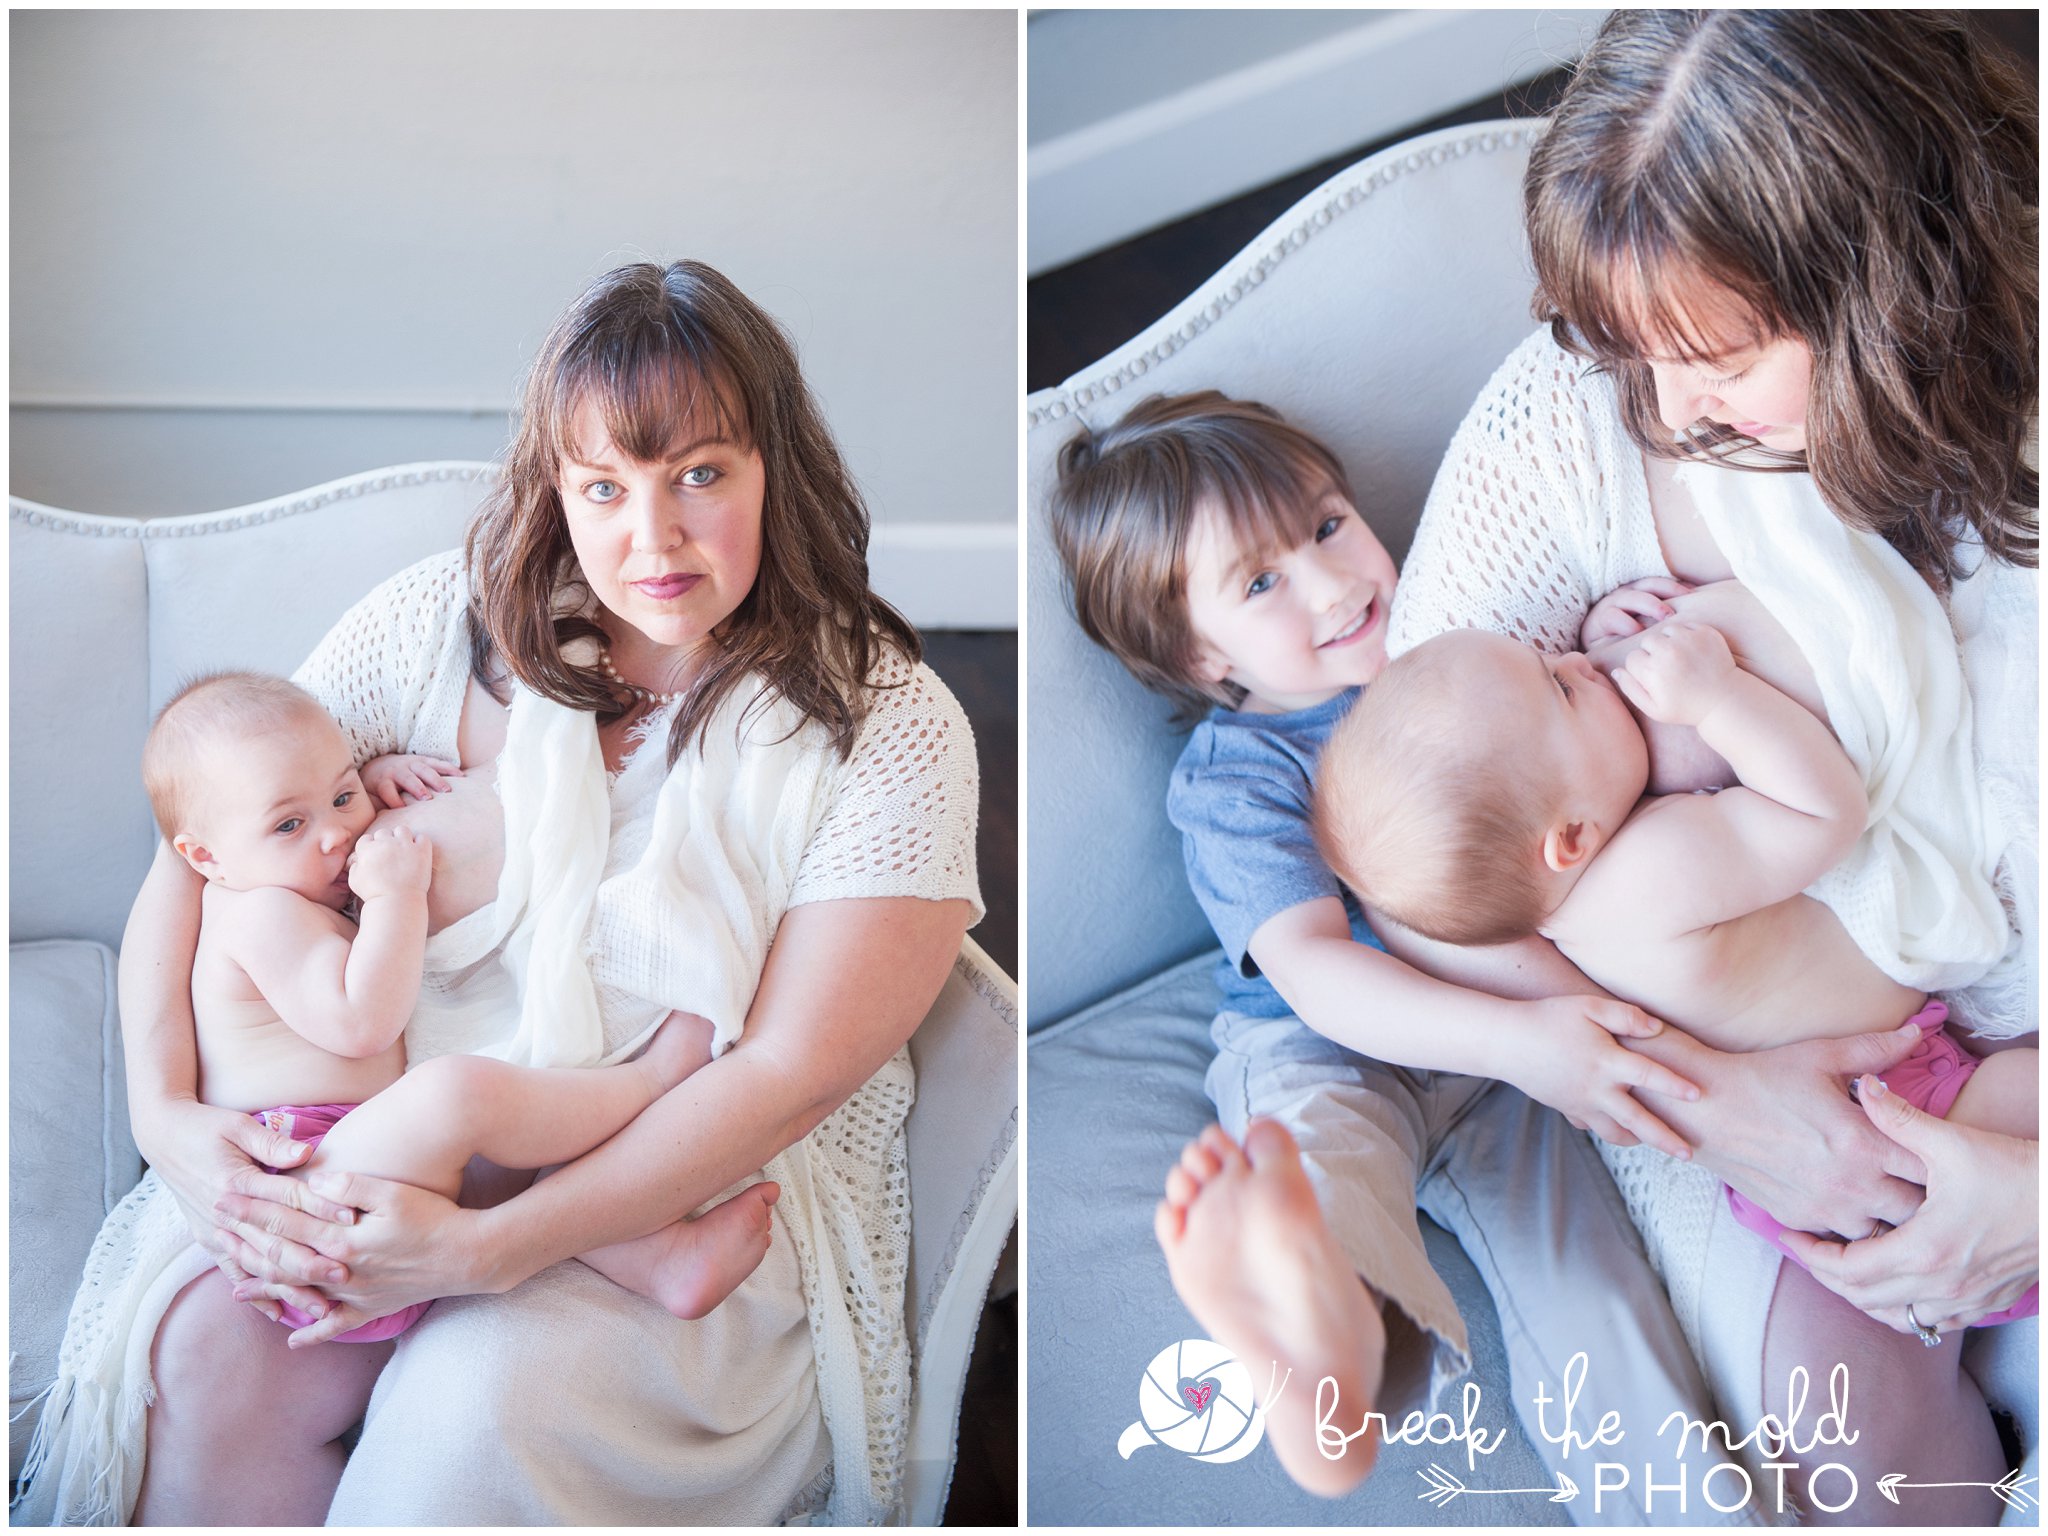 break-the-mold-photo-nursing-body-love-baby-pregnant-women-powerful-breastfeeding-sessions_7221.jpg